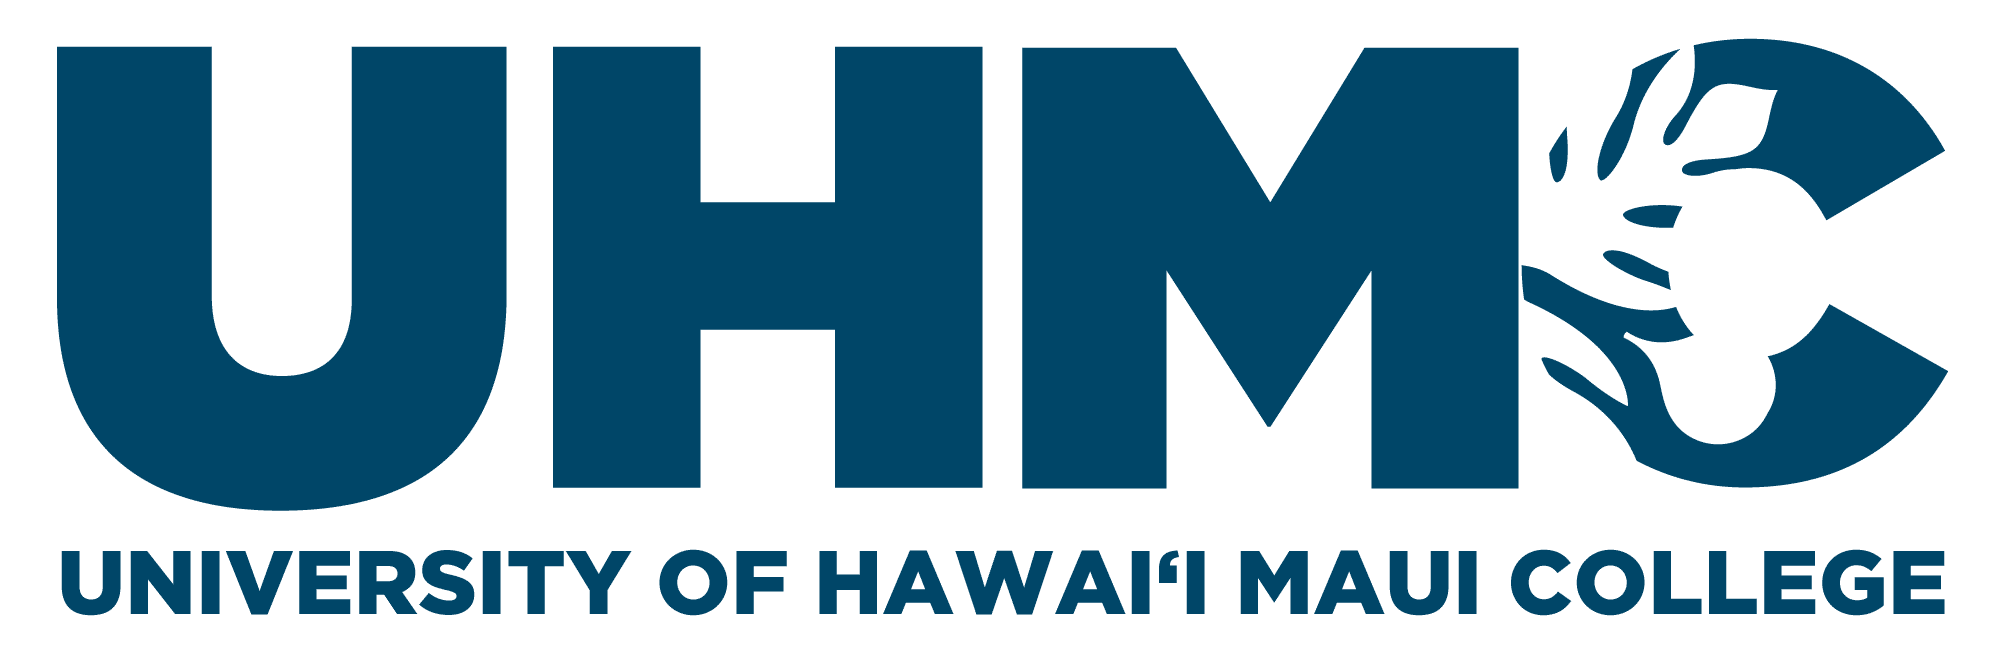 University of Hawai'i Maui College